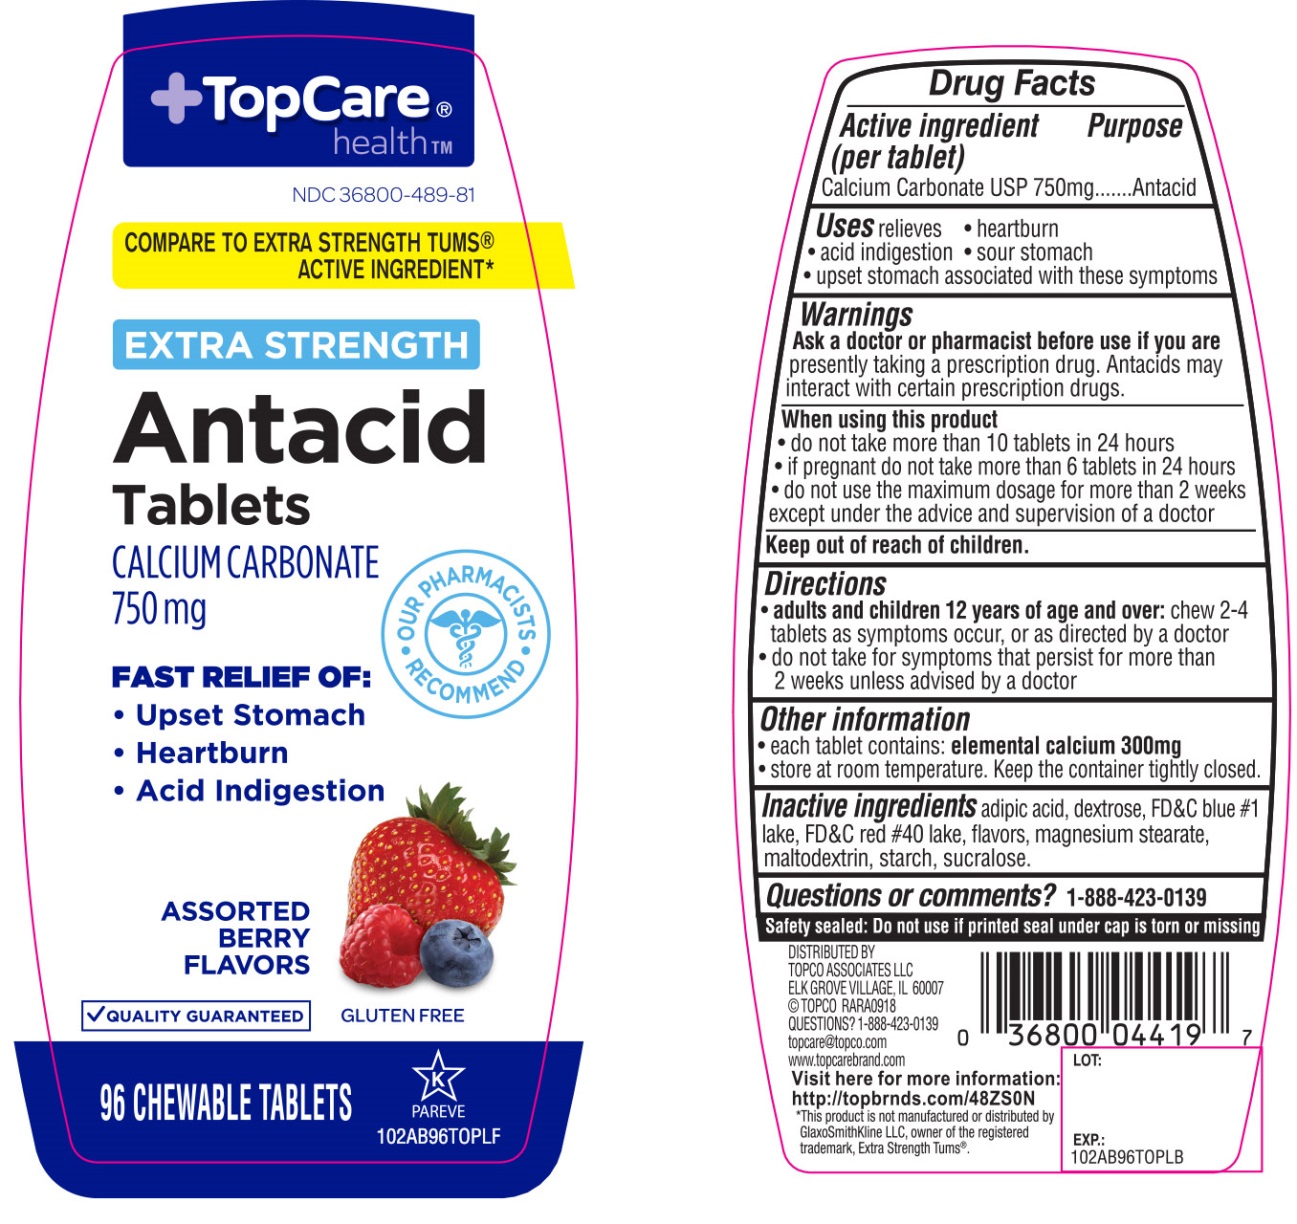 TopCare Extra Strength Antacid Calcium Carbonate Assorted Berry Flavors